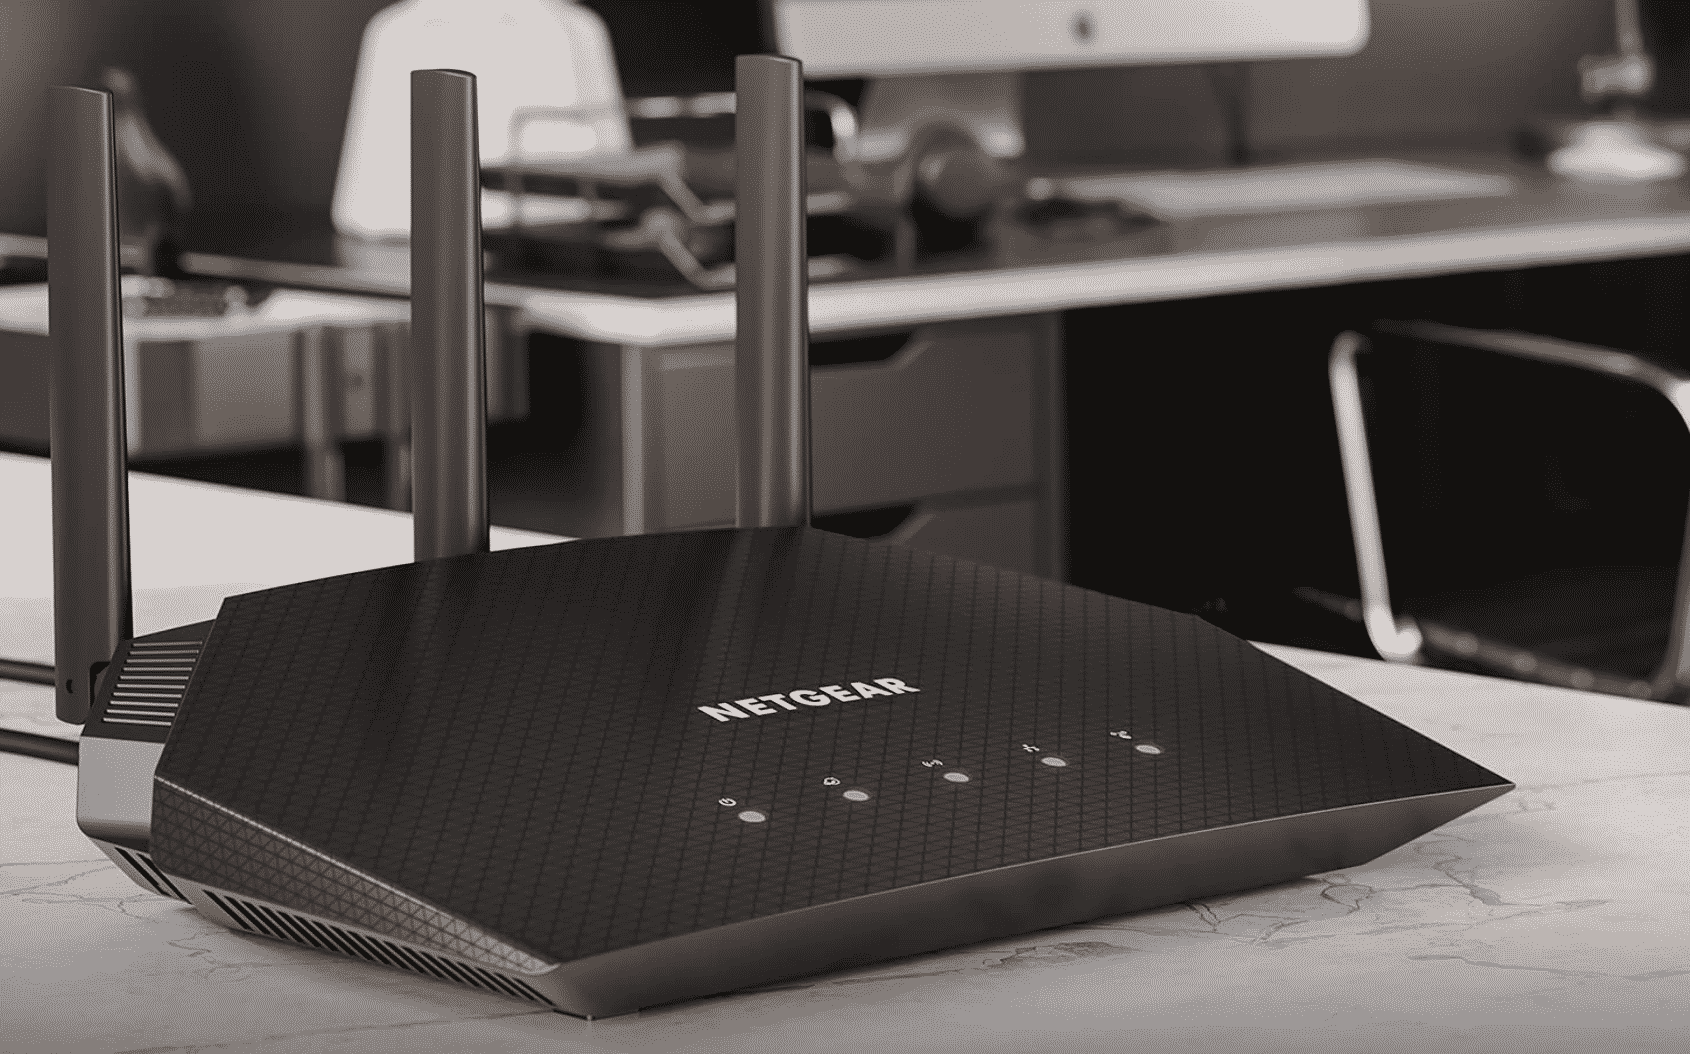 NETGEAR 4-Stream WiFi 6 Router